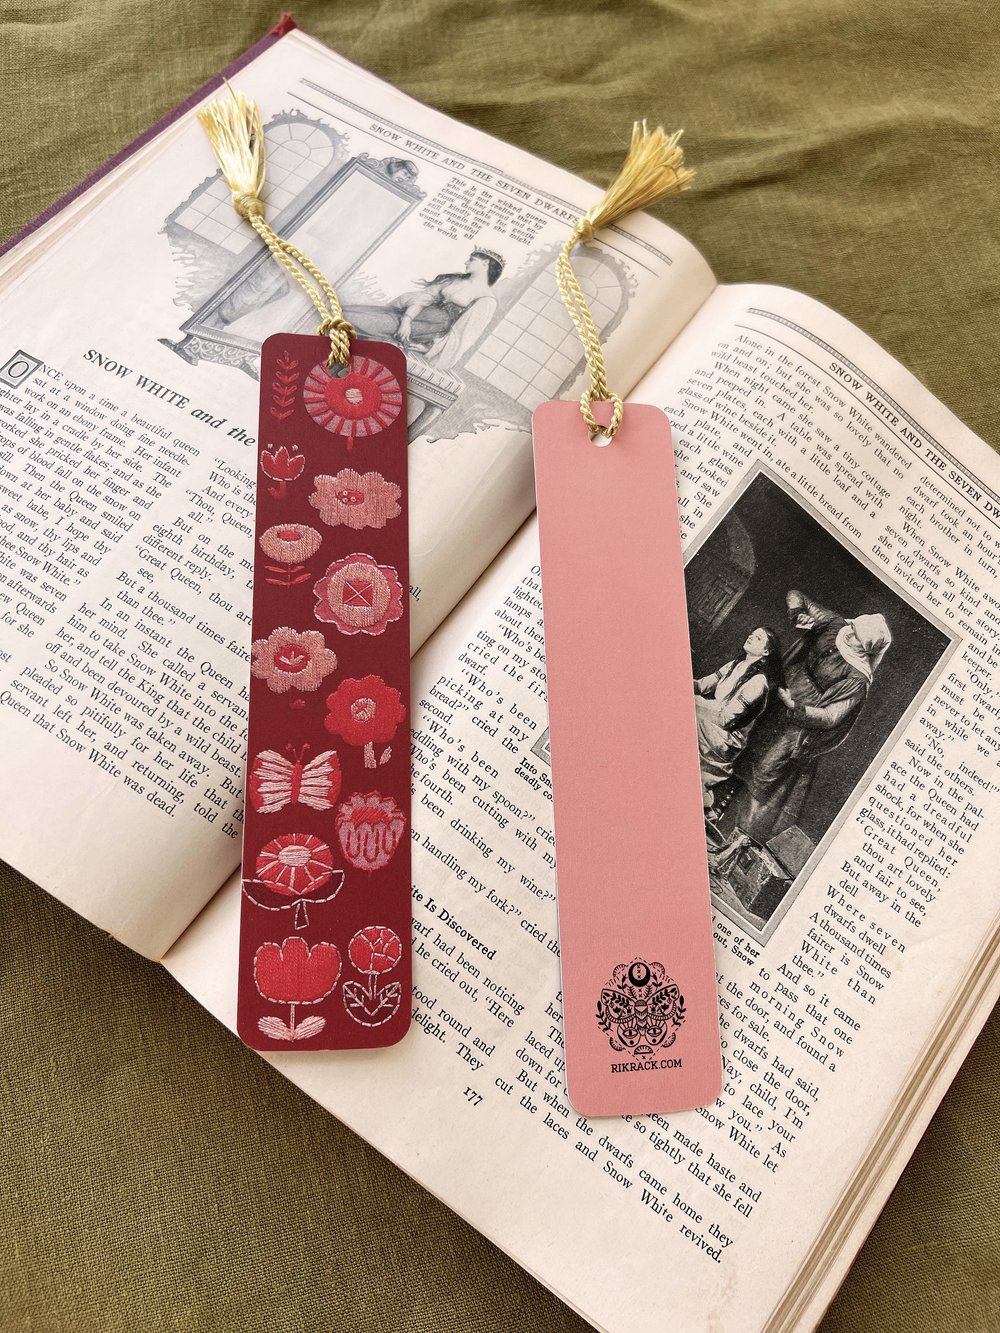 Pink Floral Bookmark Bookmark With Tassel, Cute Bookmark, Vintage